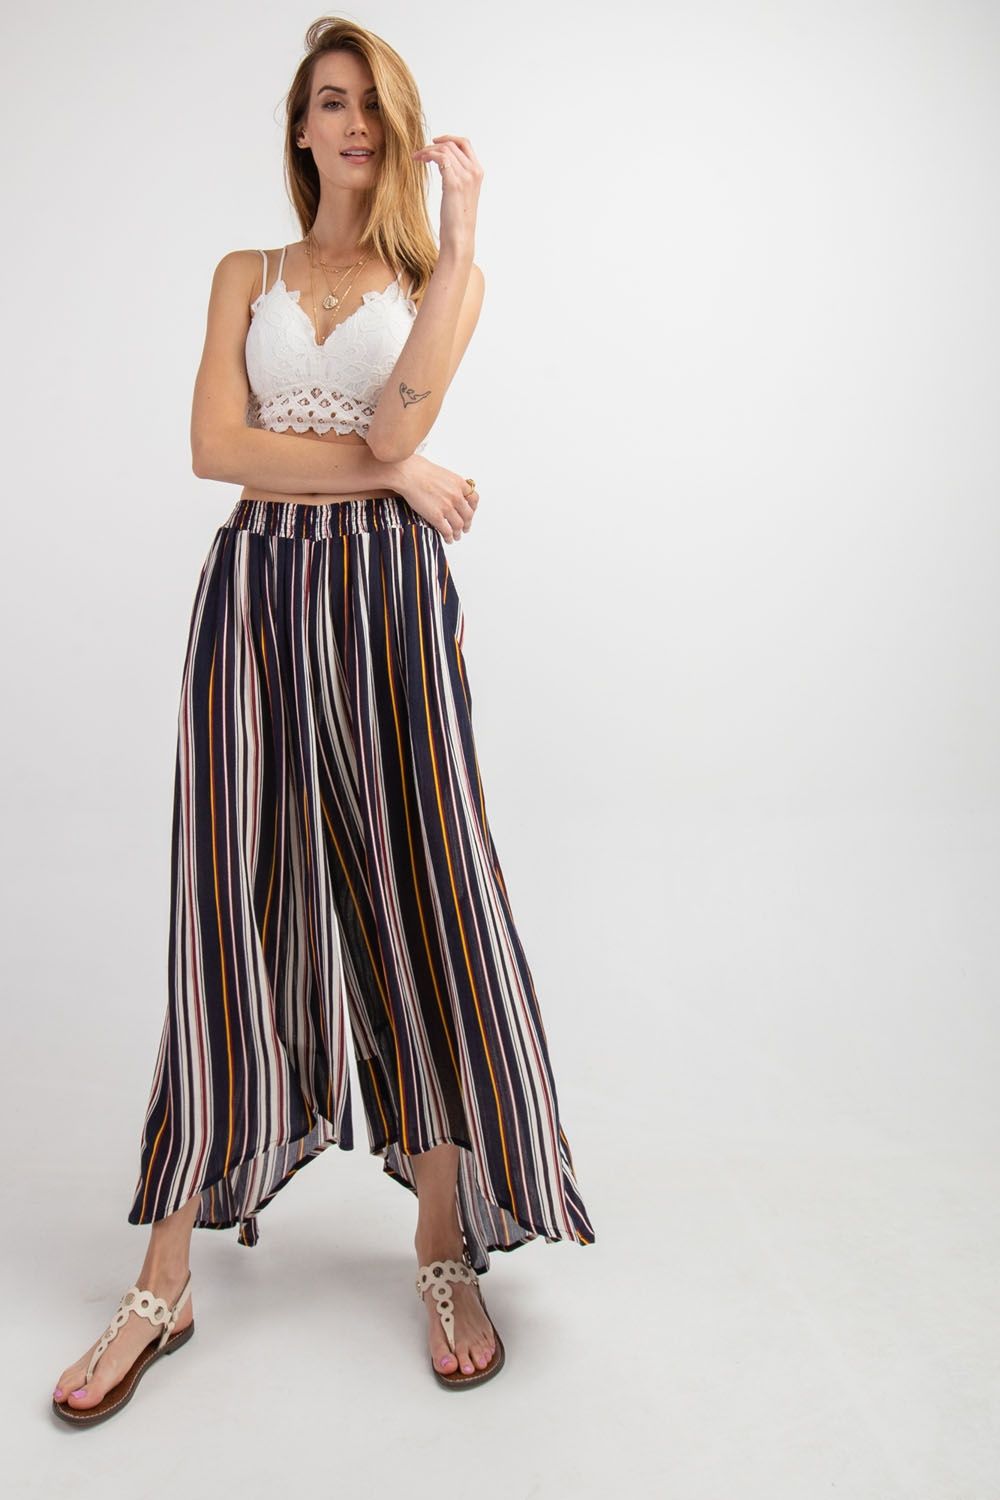 Buy Easel Elastic Waistband Stripe Printed Rayon Gauze Ruffle Pants by Sensual Fashion Boutique by Sensual Fashion Boutique